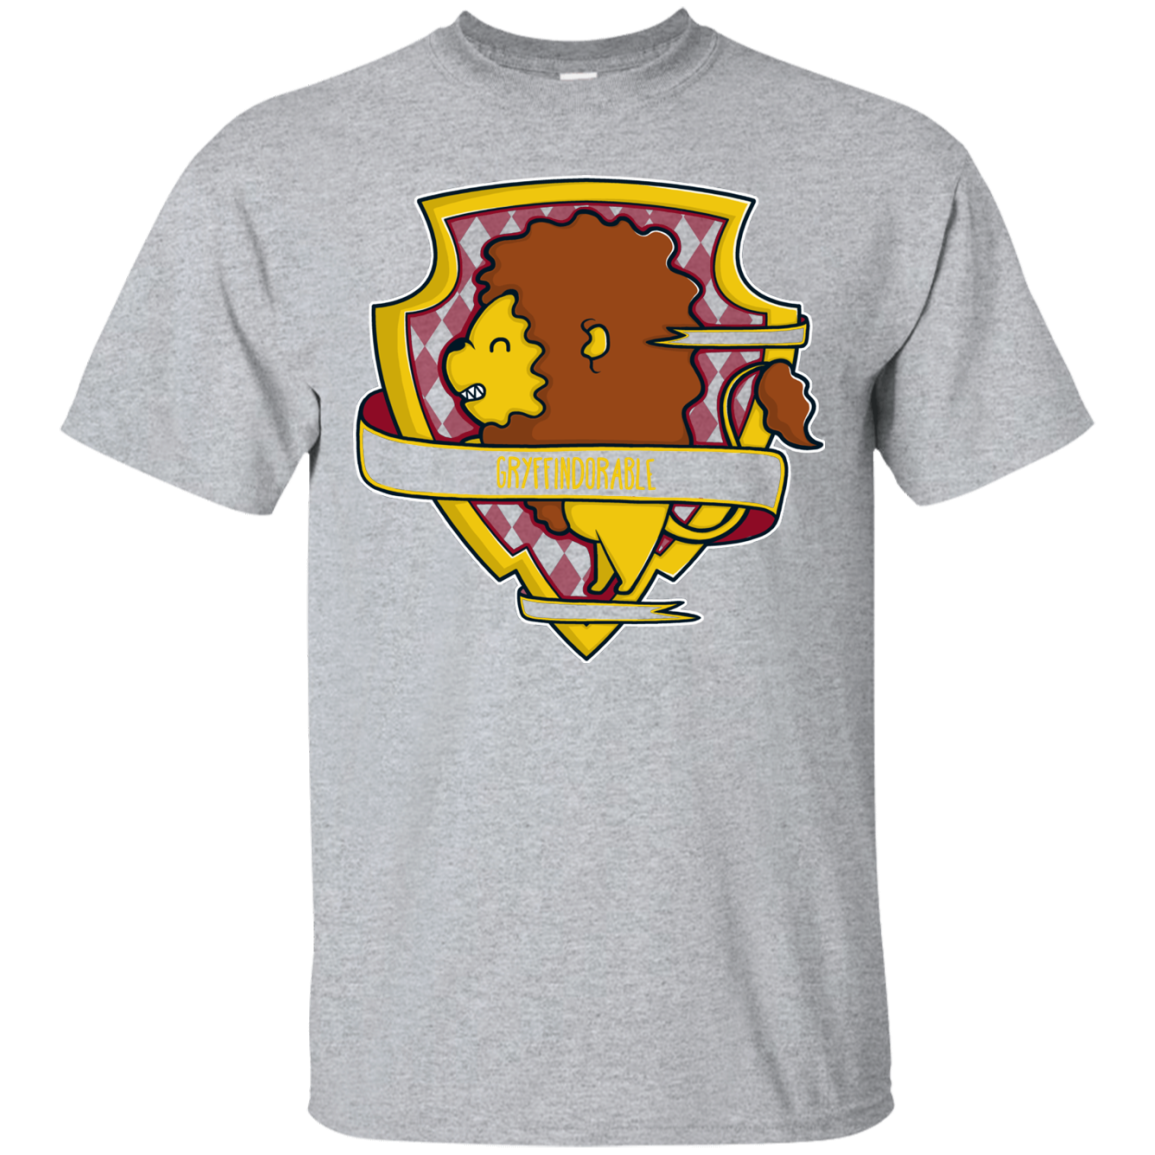 Gryffindorable T-Shirt